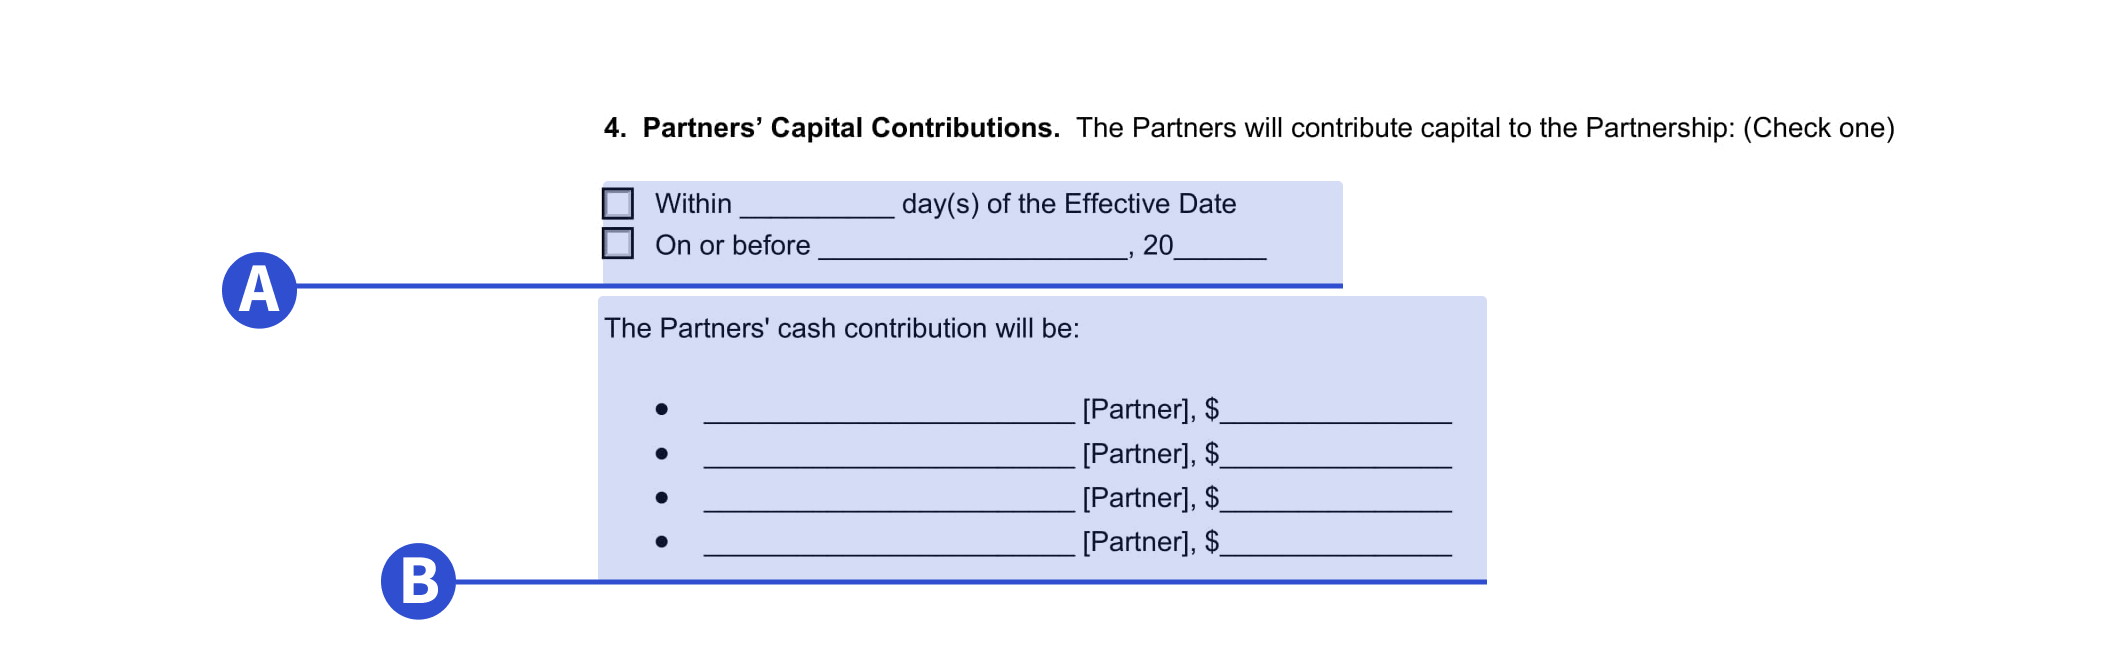 partnership agreement partners' capital contributions